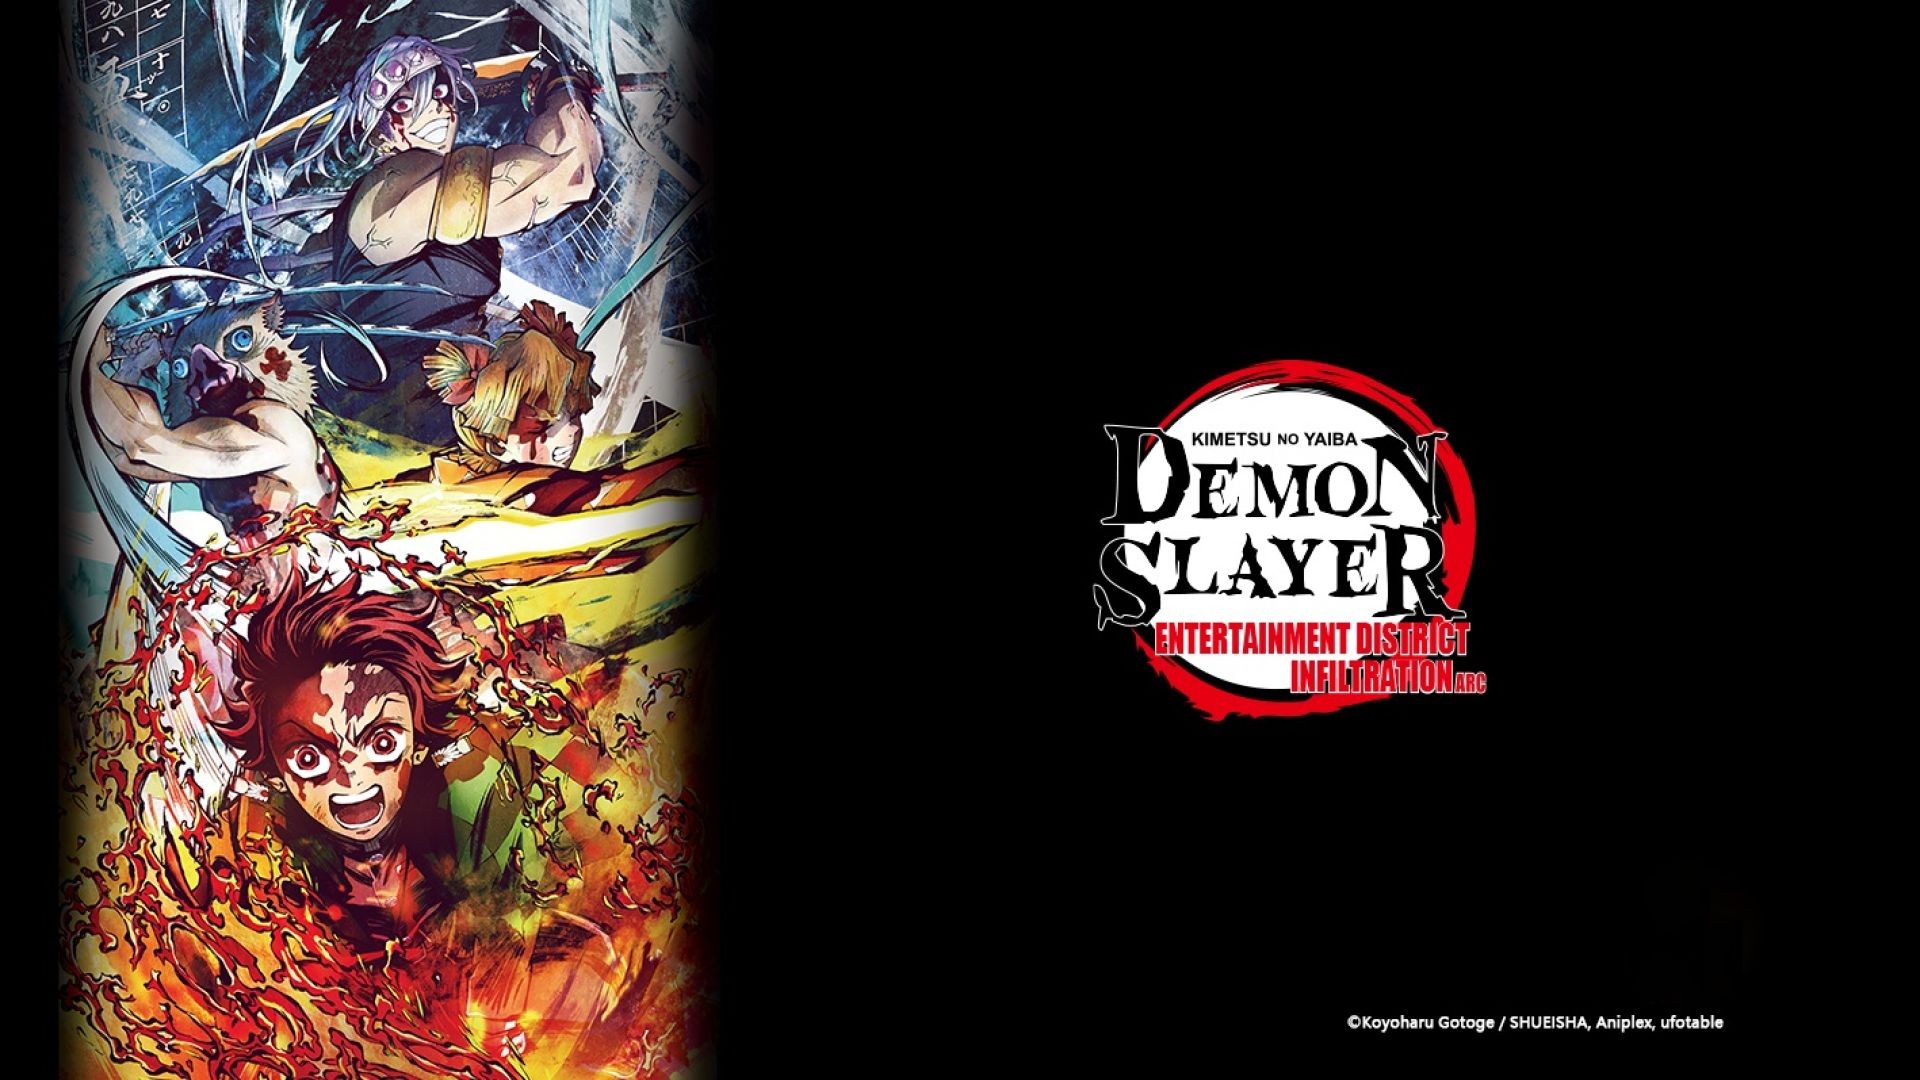 Demon Slayer: Kimetsu no Yaiba Entertainment District Infiltration Arc Dubbing Indonesia